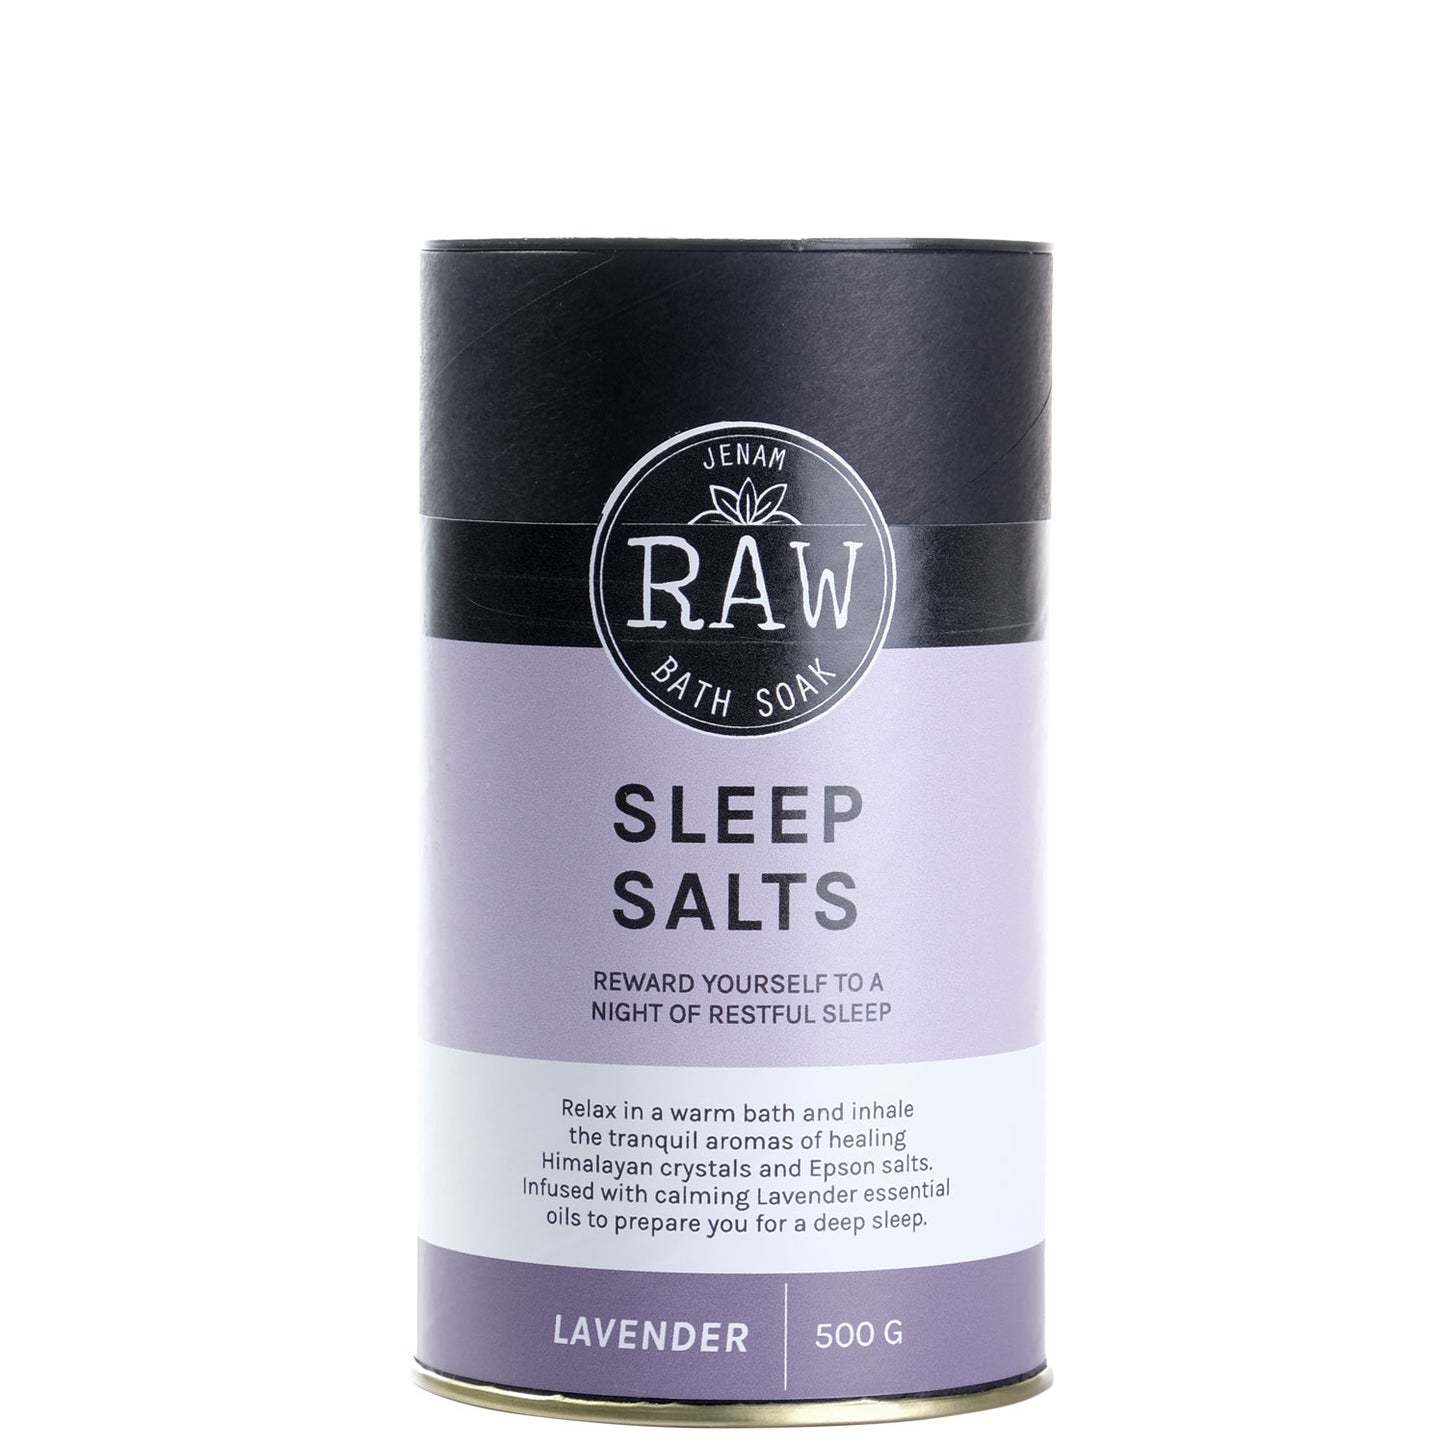 Raw Bath Soak Sleep Salts (Lavender) - 500g